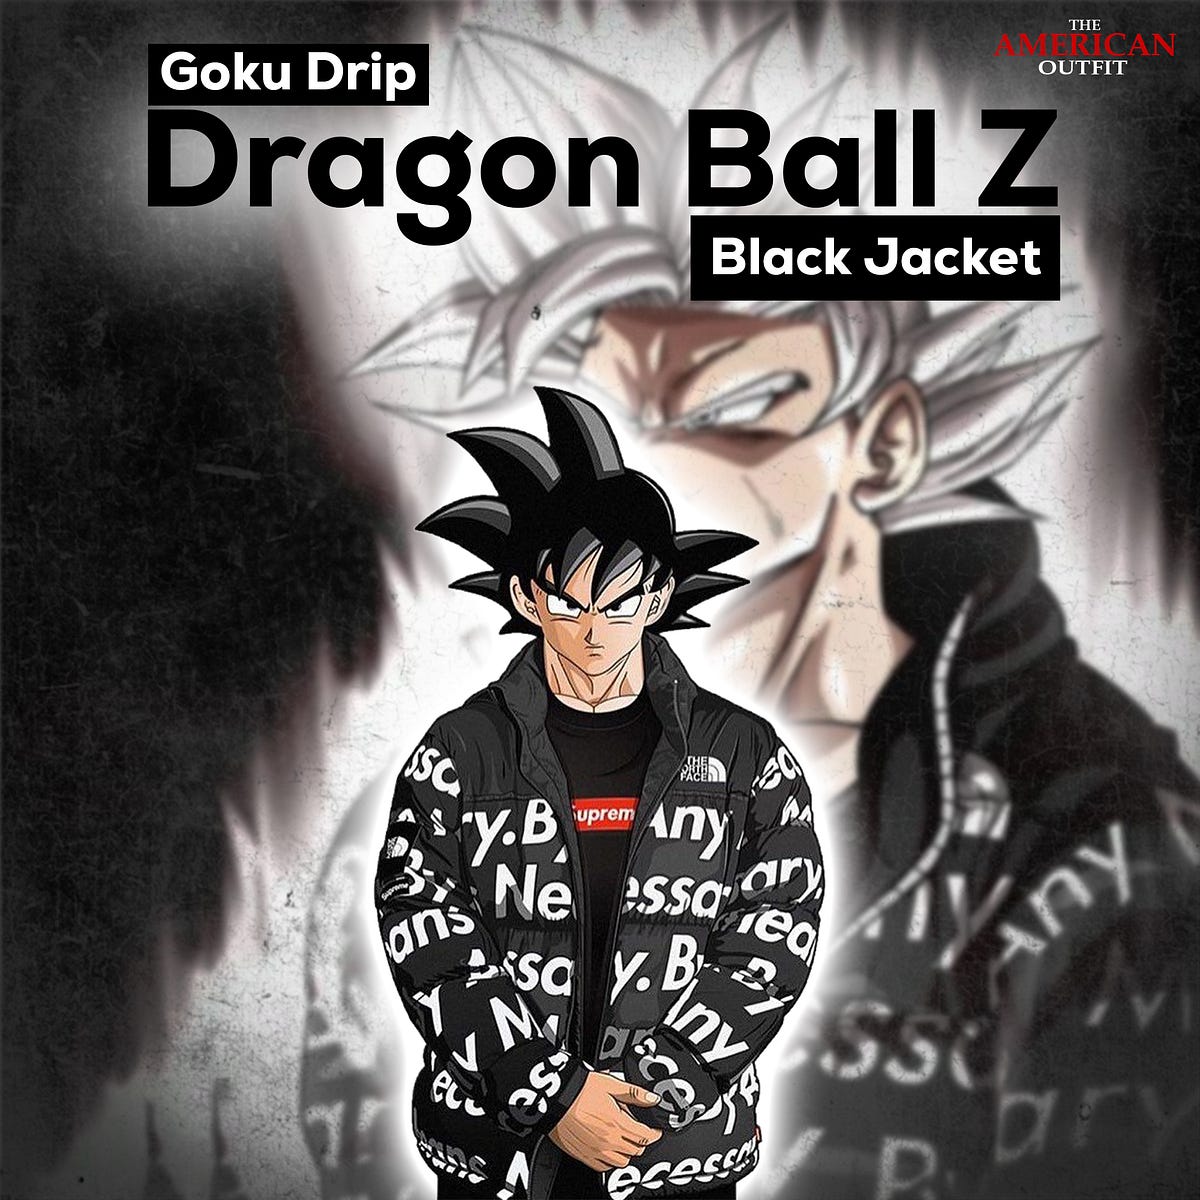 Goku Drip Costume Guide - USA Jacket